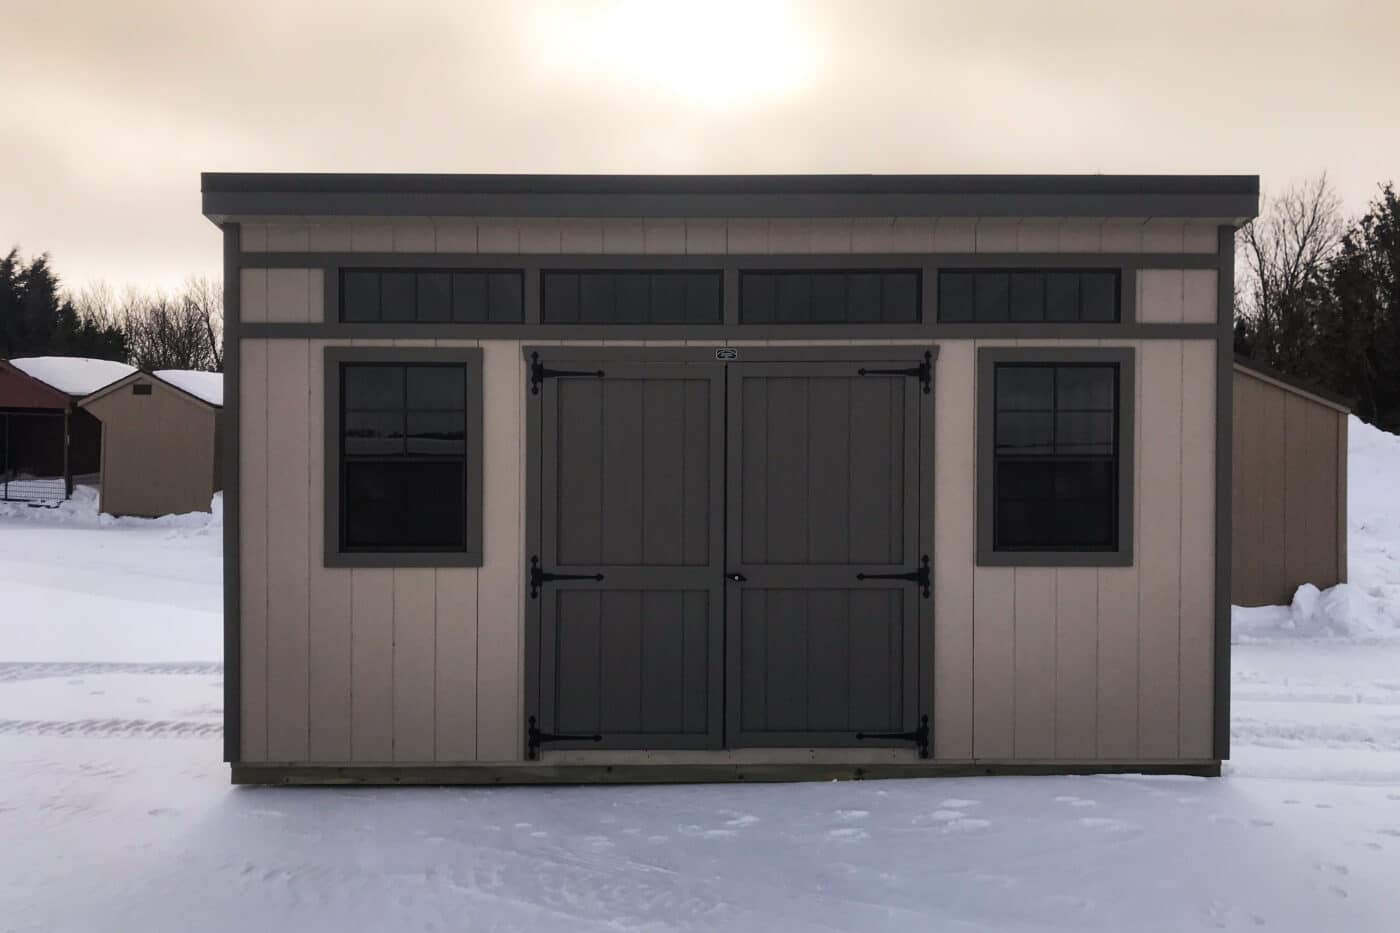 tan & black trim modern studio shed in snow